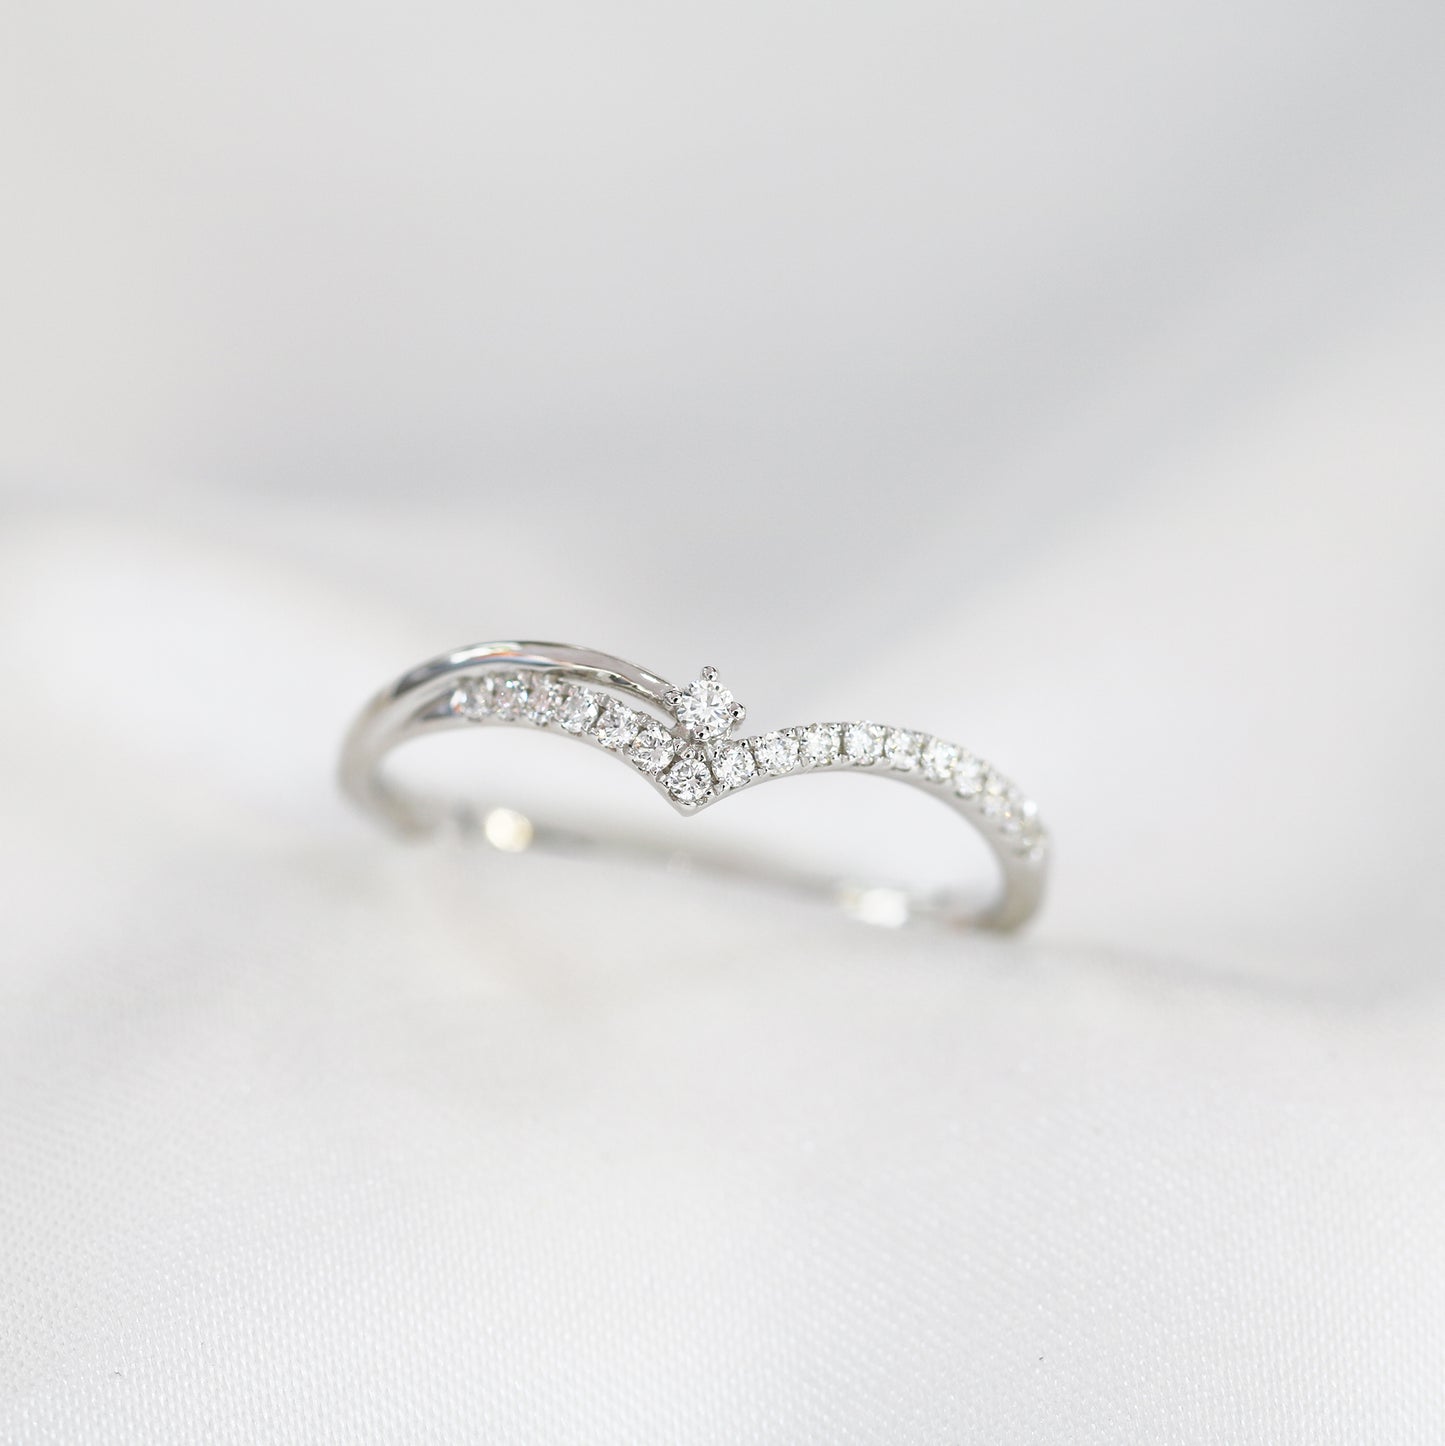 18k白金V形鑽石戒指 18k White Gold V-shaped Diamond Ring